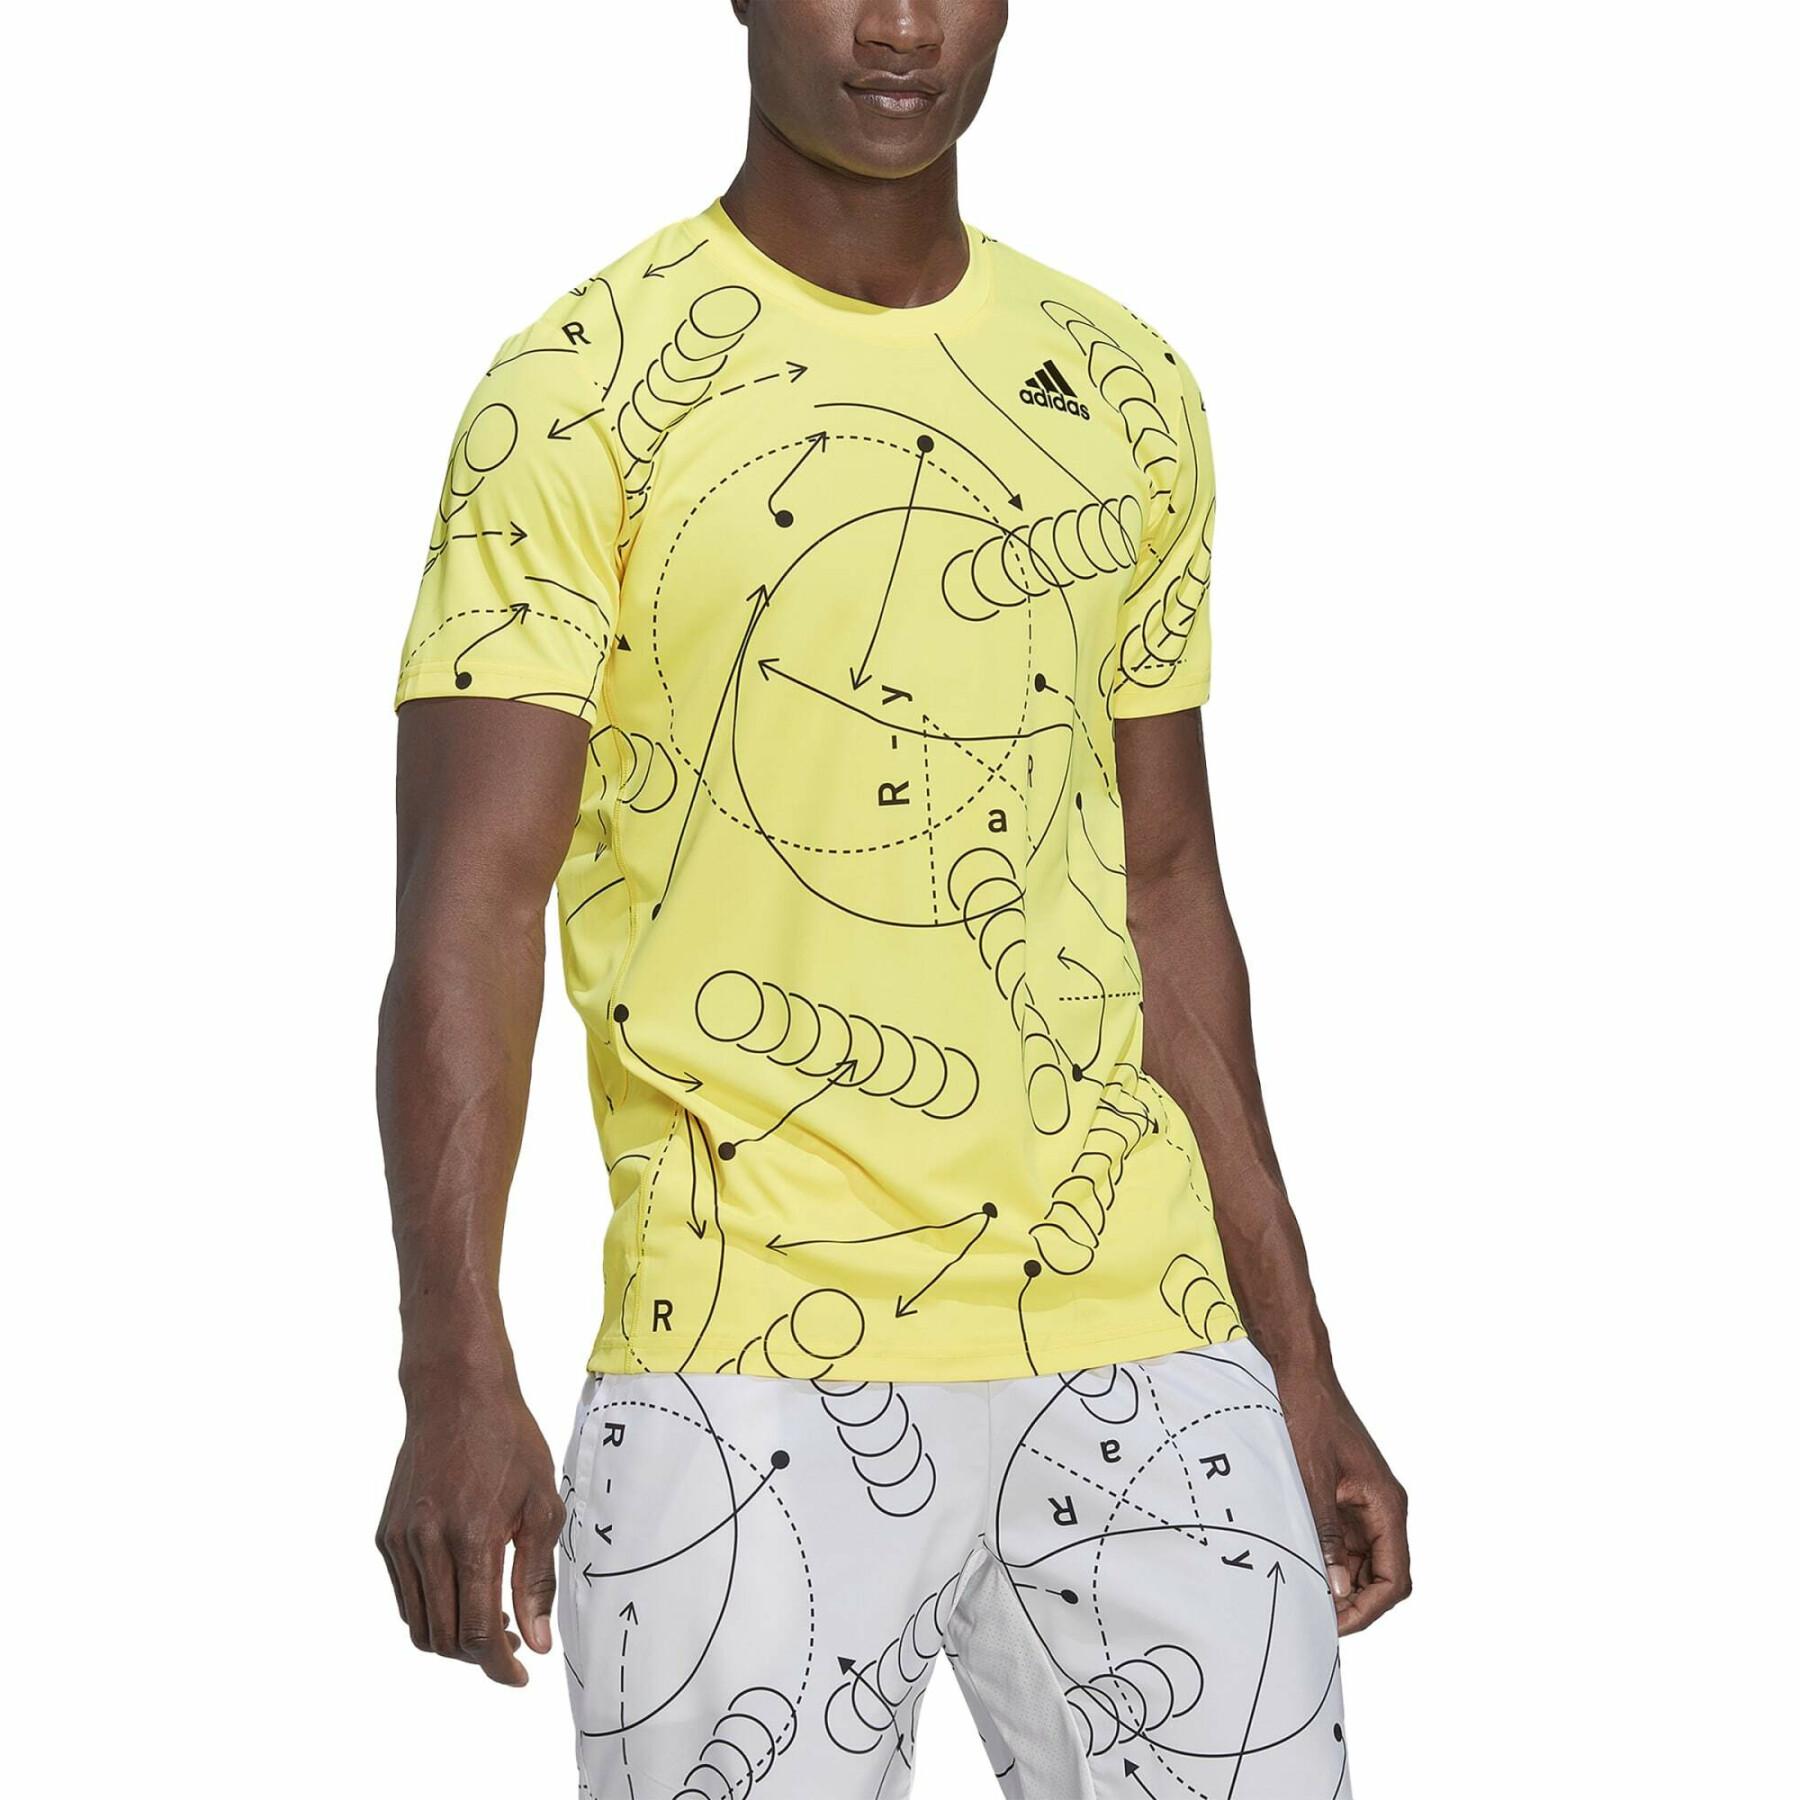 Tennis club jersey with print adidas